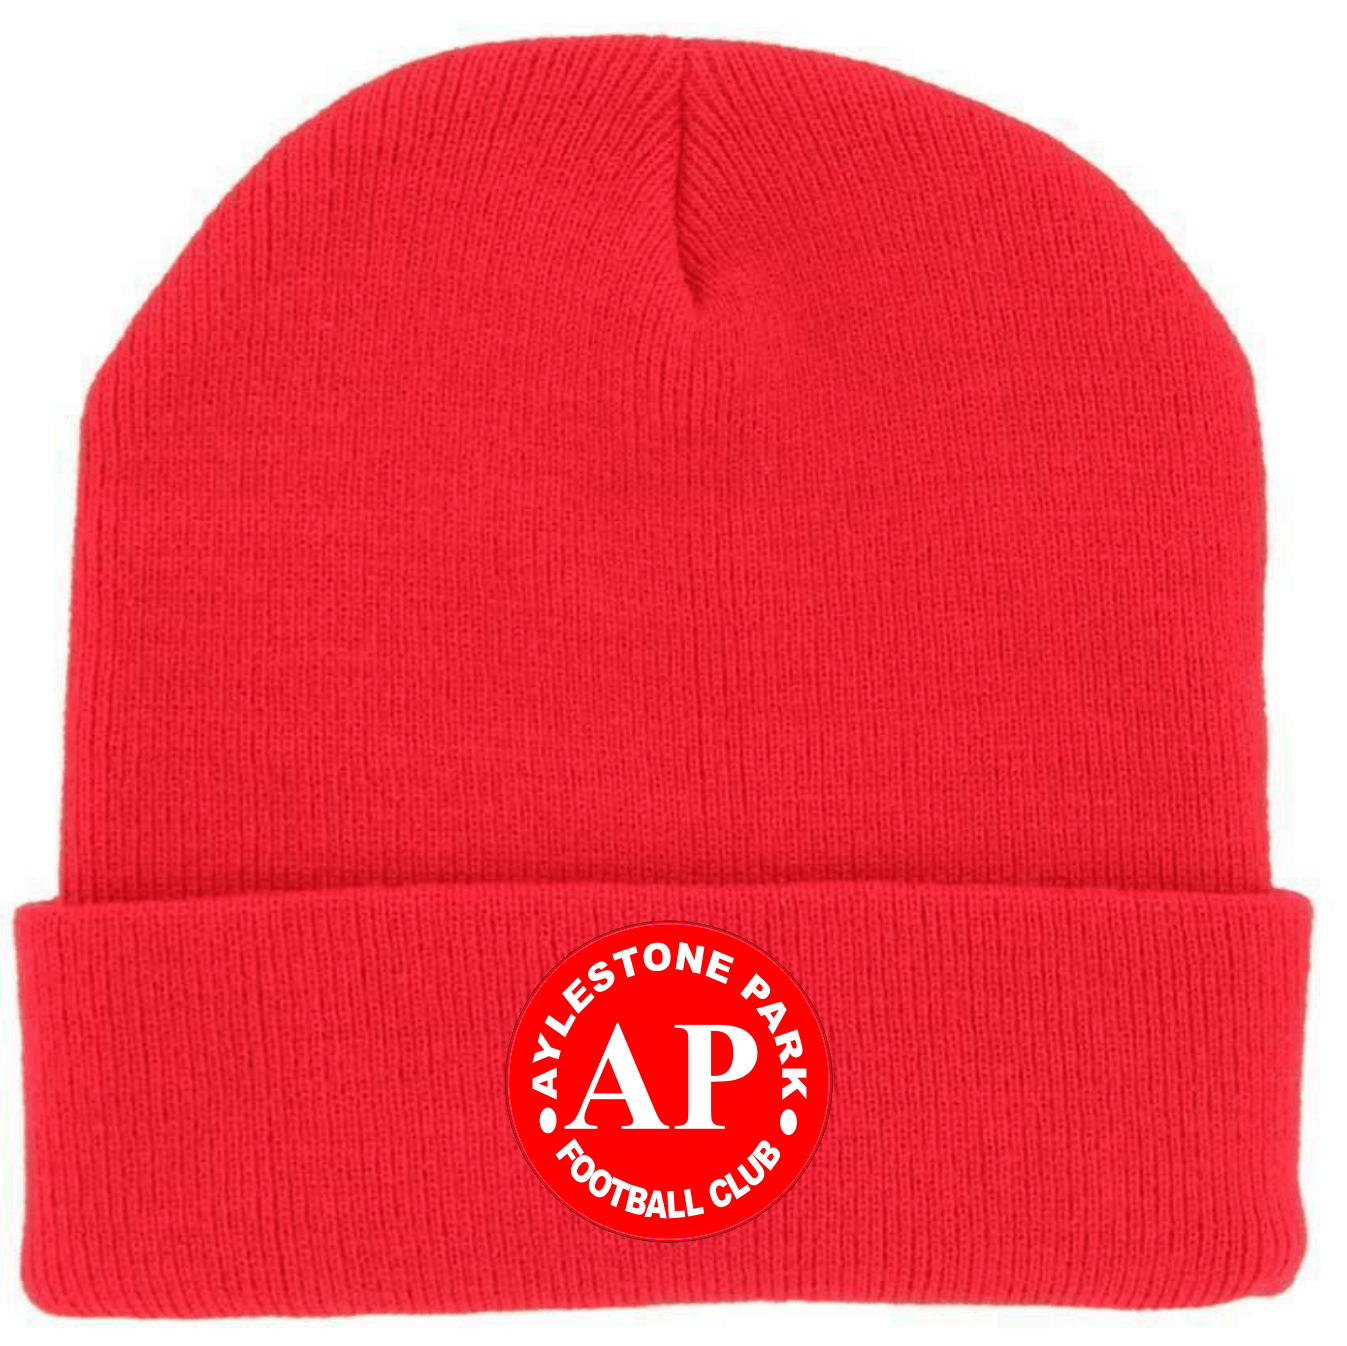 Aylestone Park - Red Beanie Hat